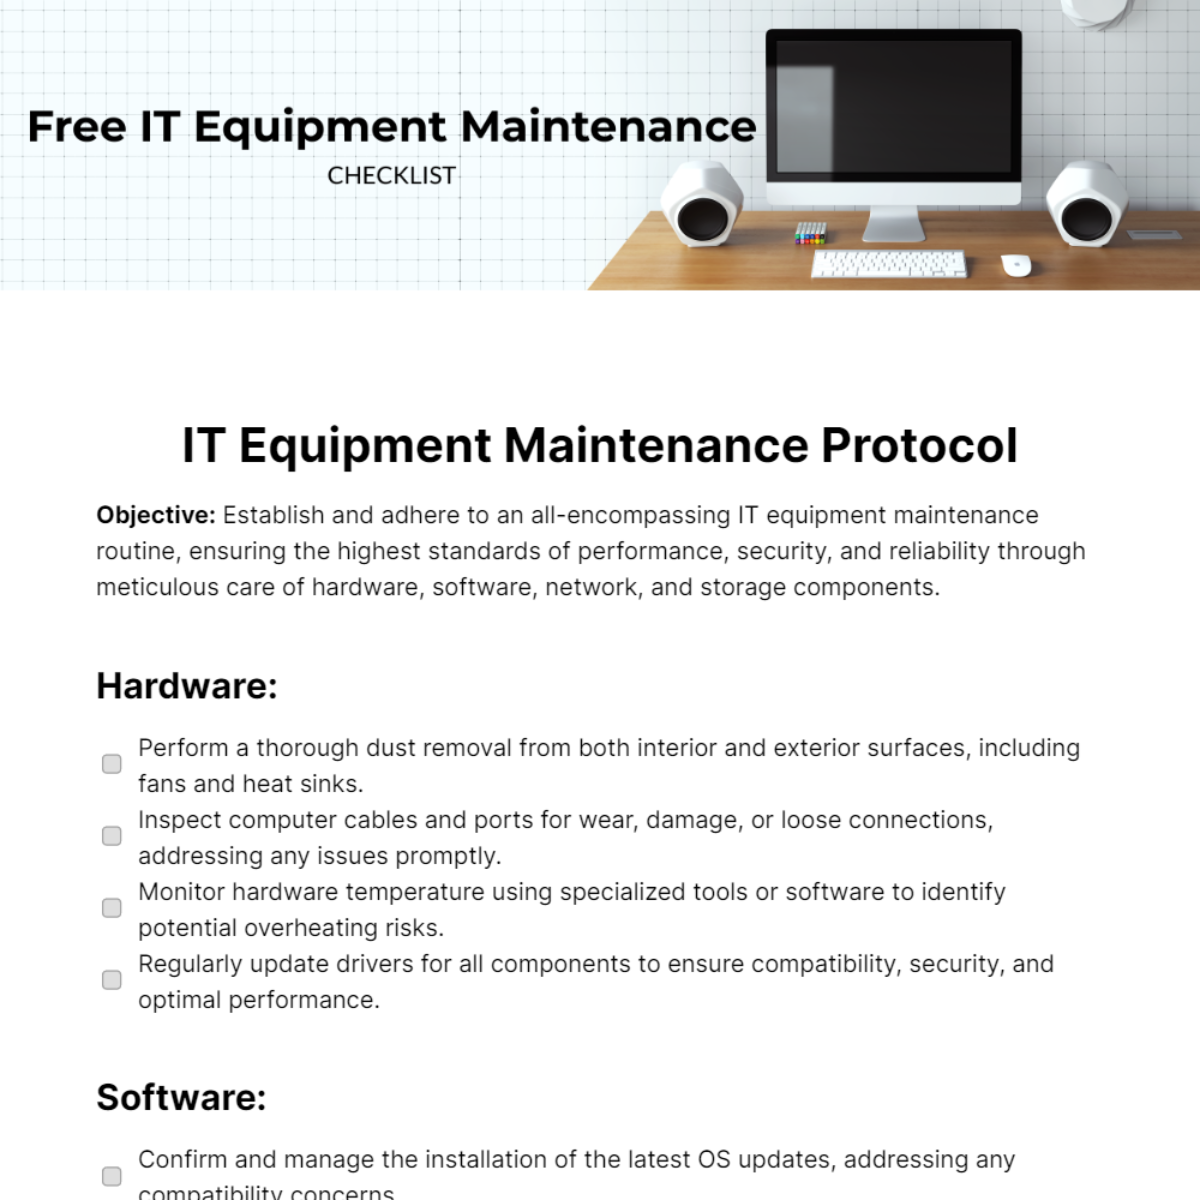 Free IT Equipment Maintenance Checklist Template